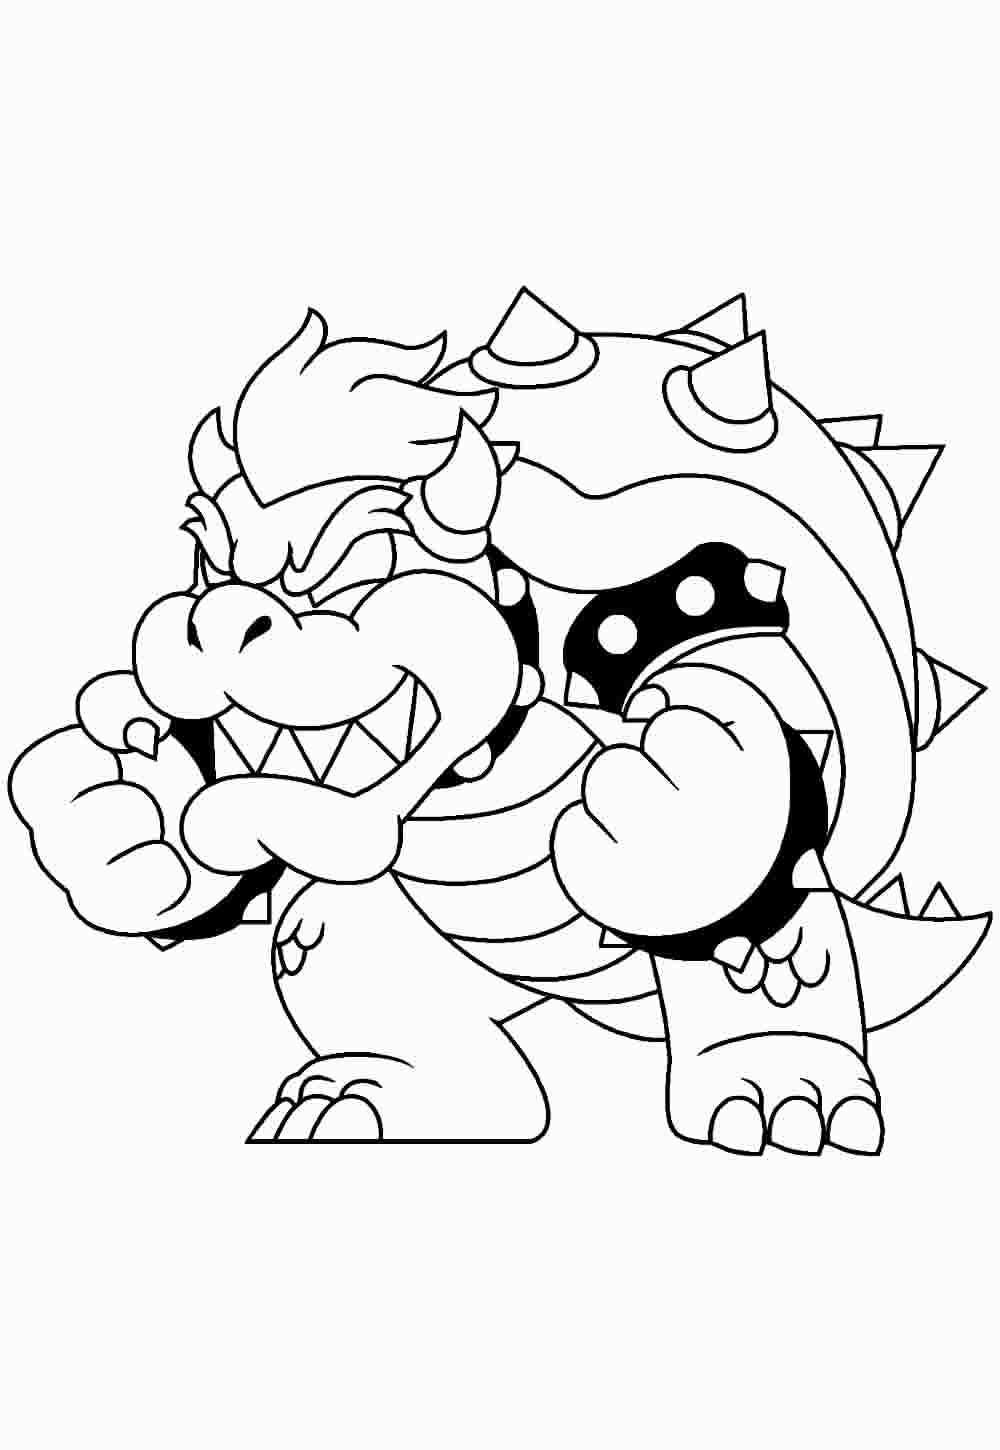 Desenho de Bowser para colorir - Mario Bros